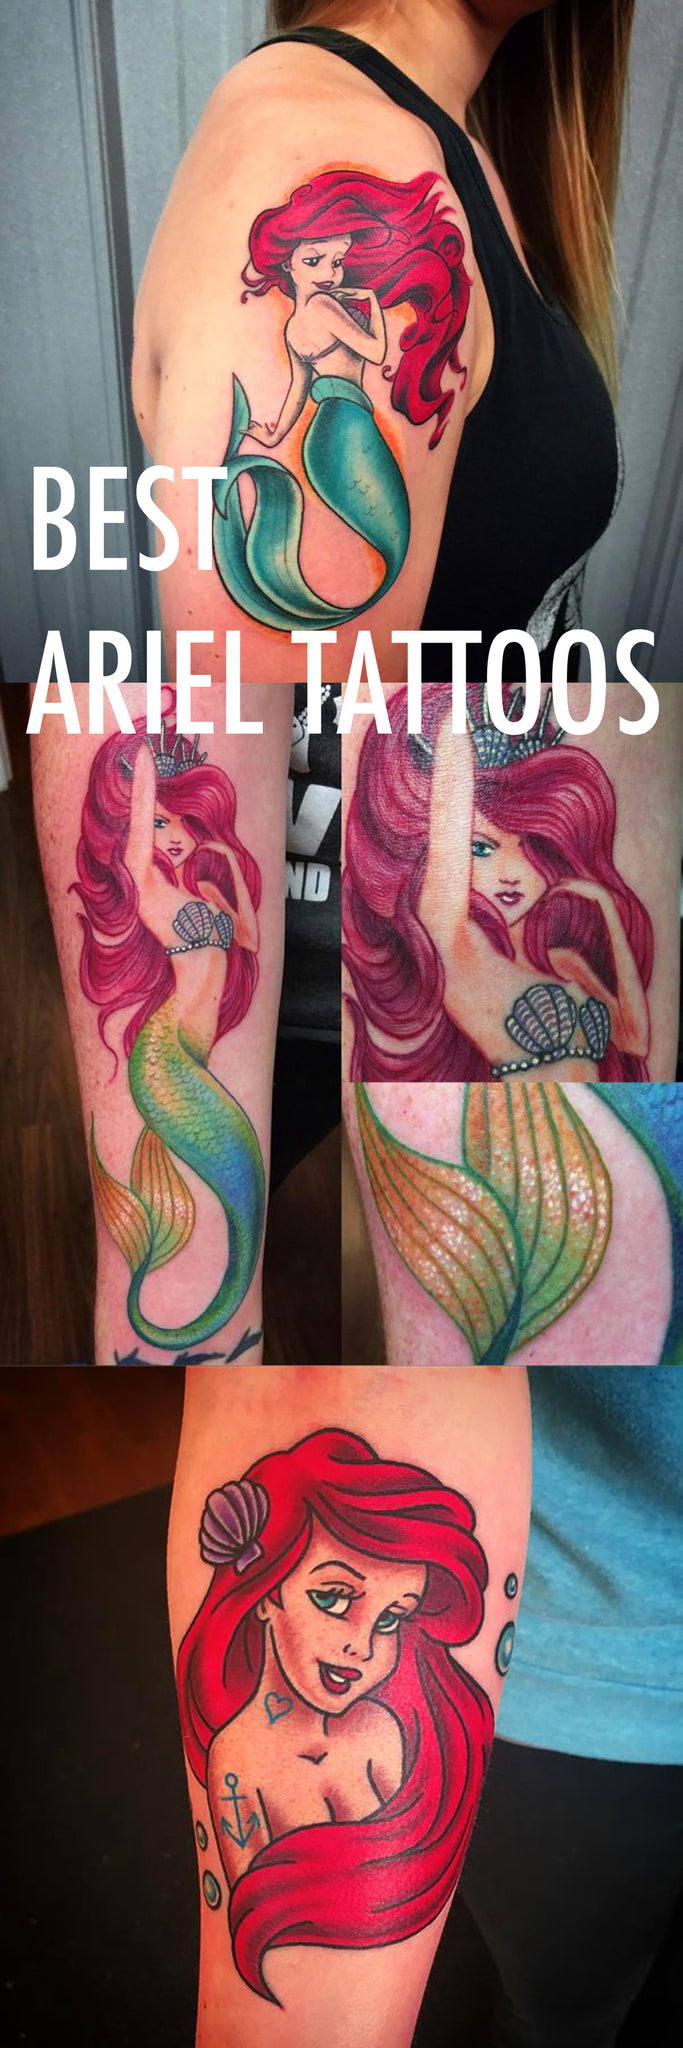 Little Mermaid Tattoo Ideas for Women - Princess Ariel Arm Sleeve Forearm Red Hair Green Tail Realistic Disney 